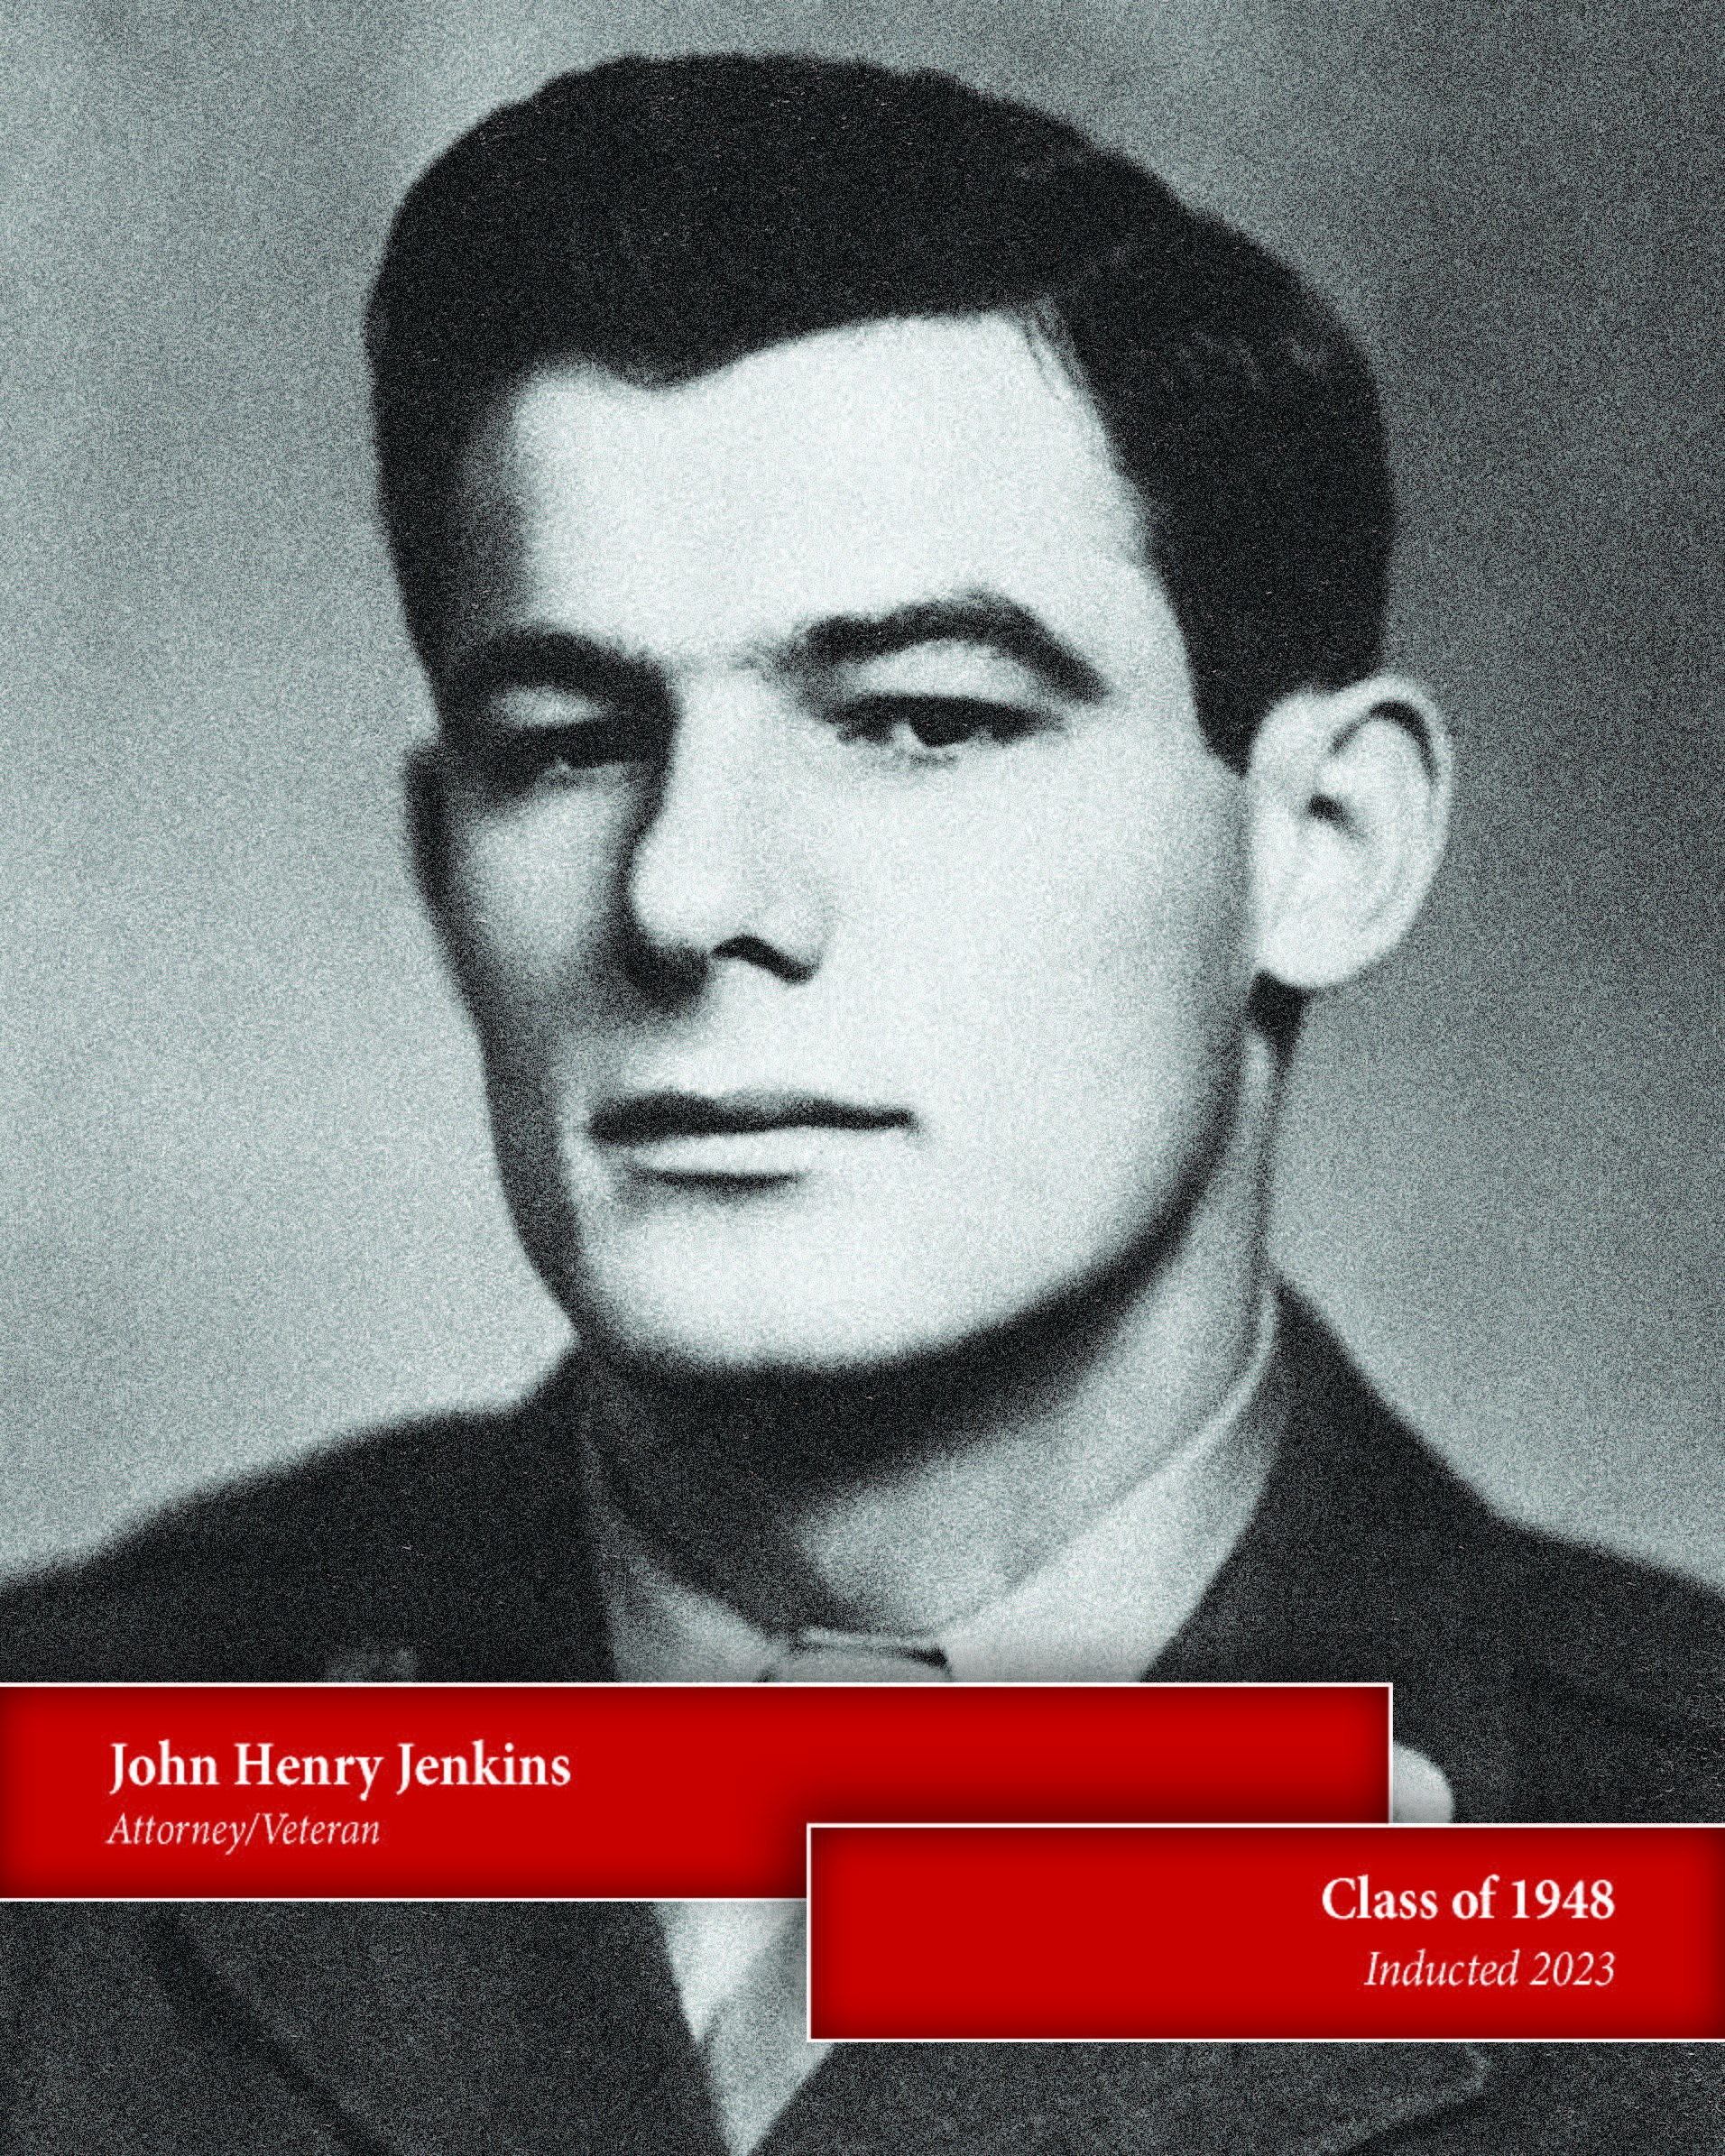 John Henry Jenkins '48